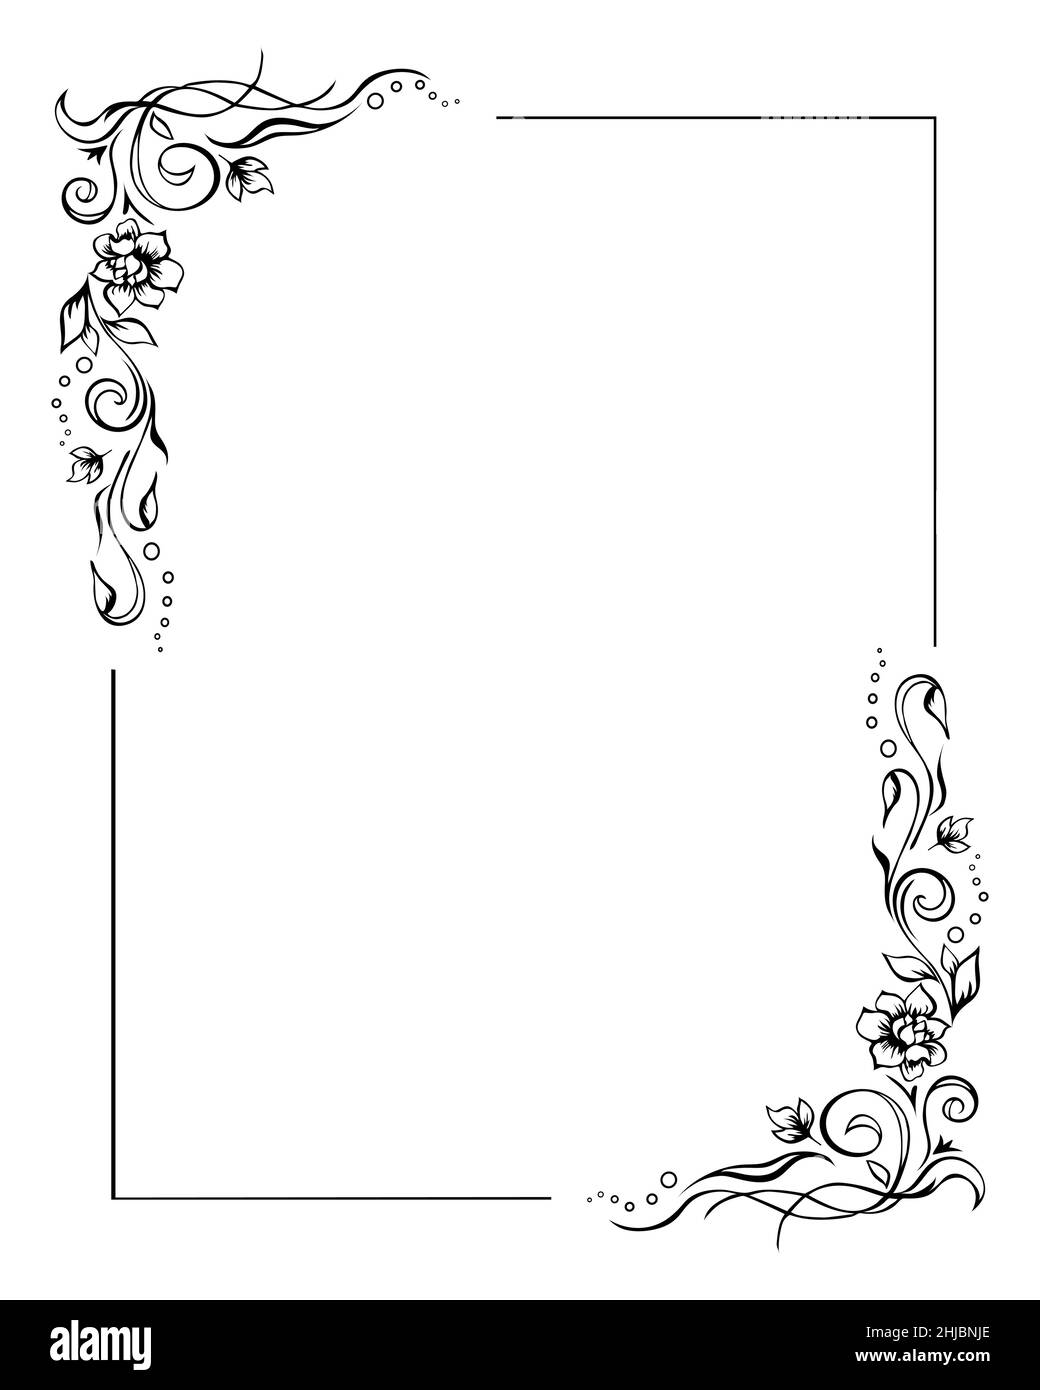 https://c8.alamy.com/comp/2HJBNJE/rectangular-floral-frame-rose-border-template-with-flourishes-in-two-corners-elegant-hand-drawn-decorative-elements-foliage-and-blossom-editable-2HJBNJE.jpg